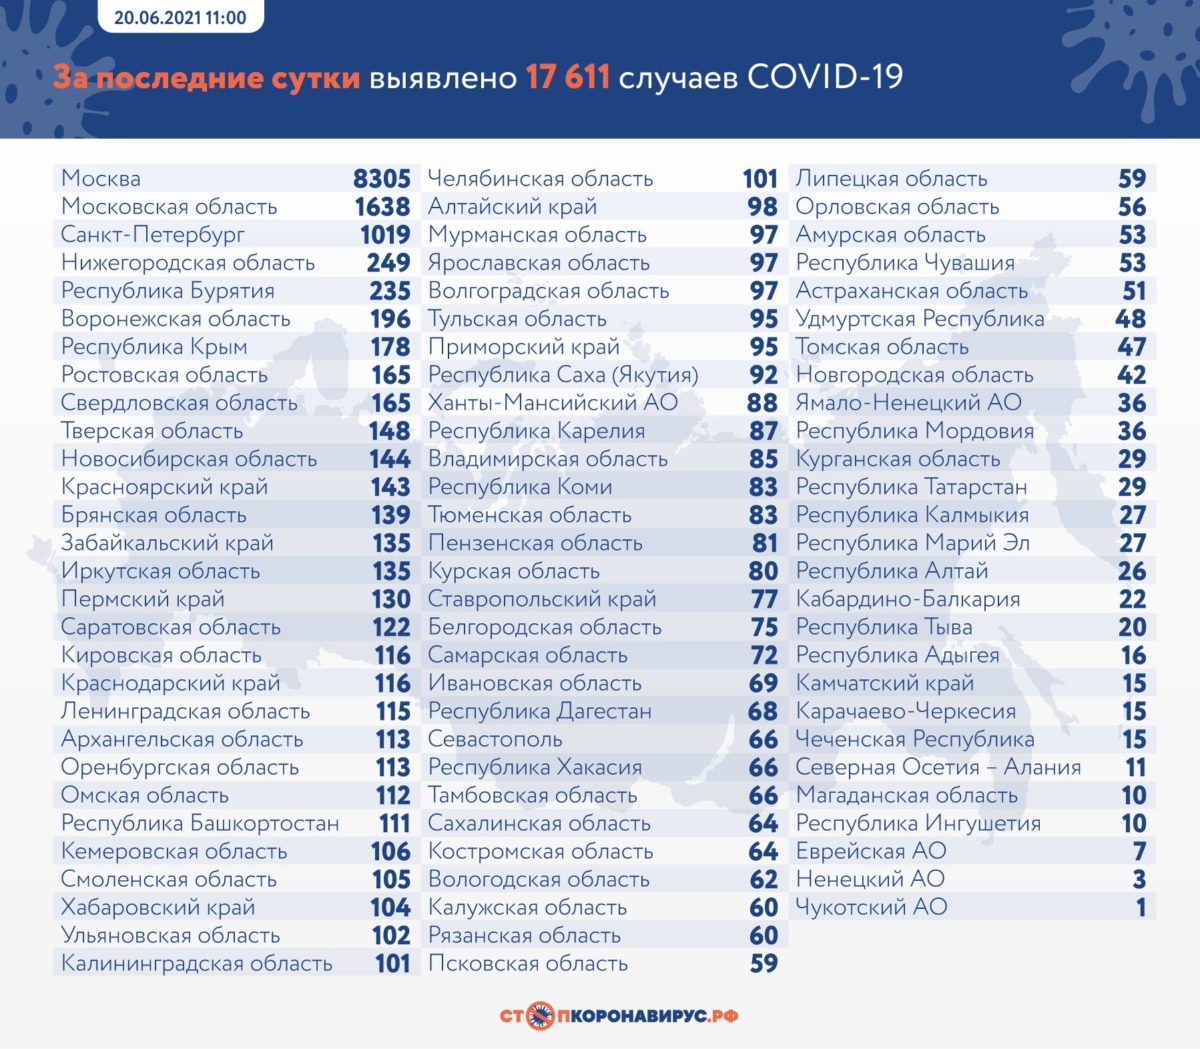 Оперативная статистика коронавируса в России на 20 июня